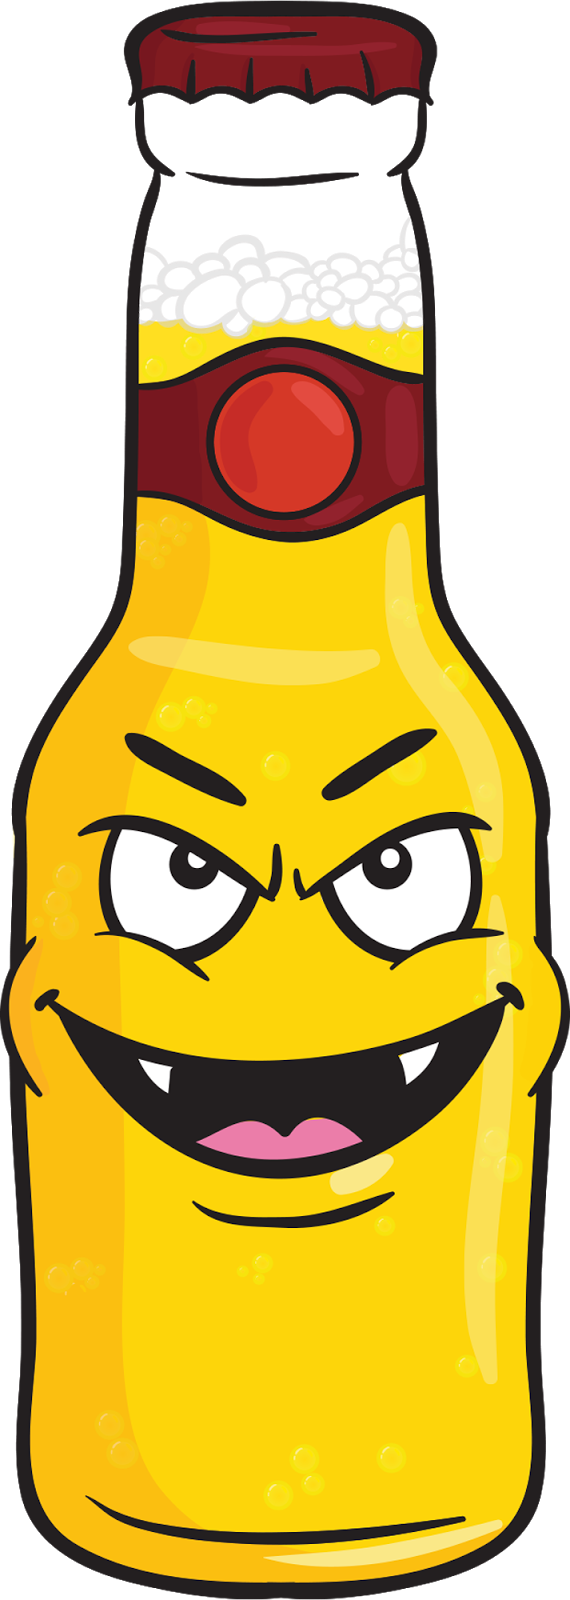 Upcoming Jacksonville Craft Beer Events - Beer Emoji Bottle (570x1600)